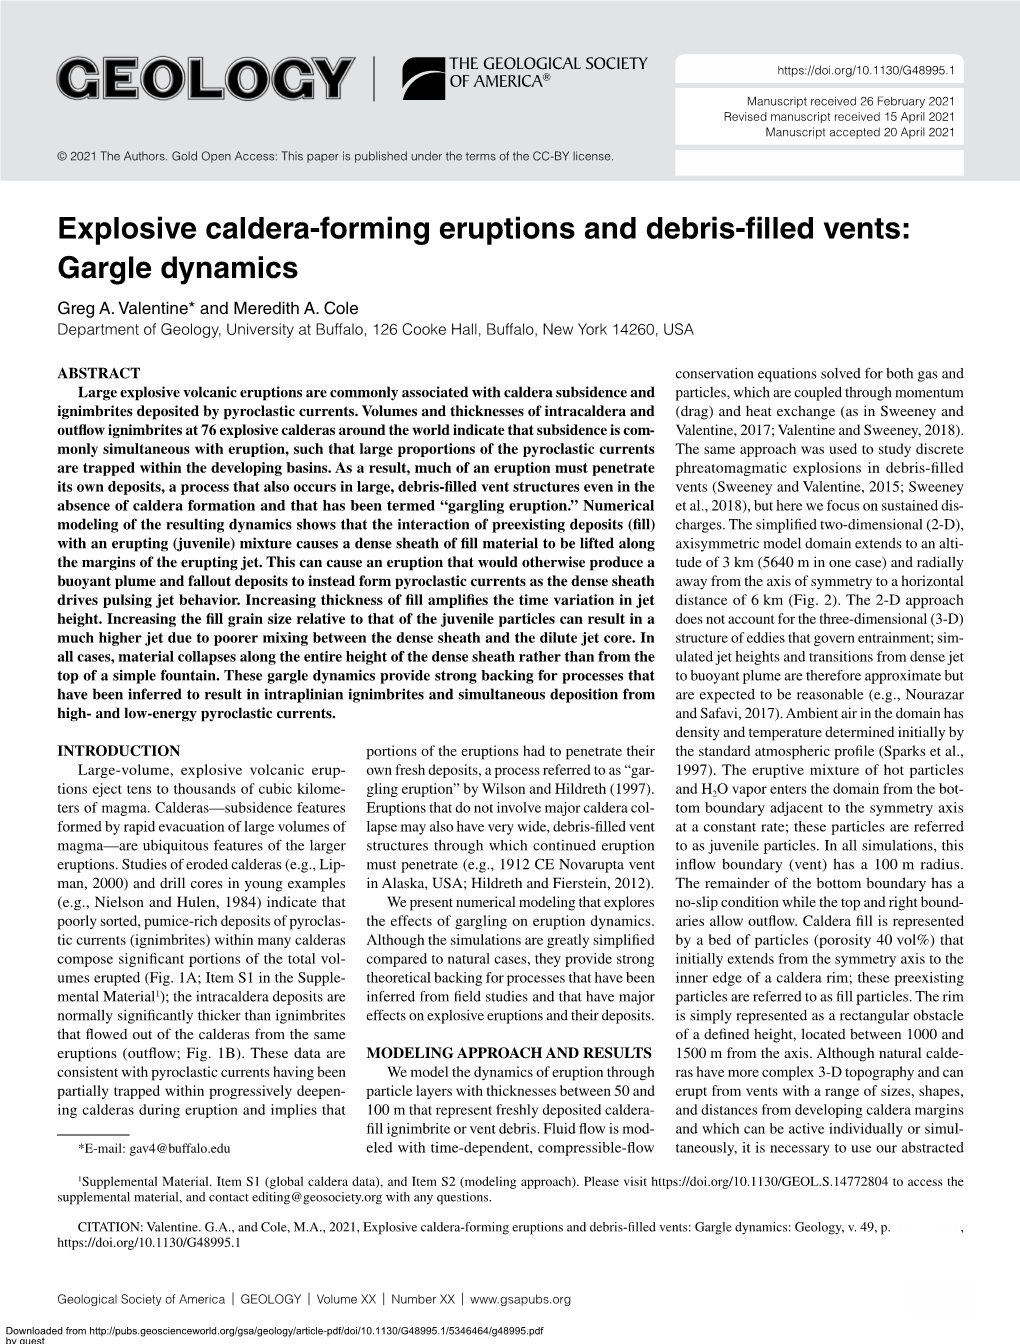 Explosive Caldera-Forming Eruptions and Debris-Filled Vents: Gargle Dynamics Greg A